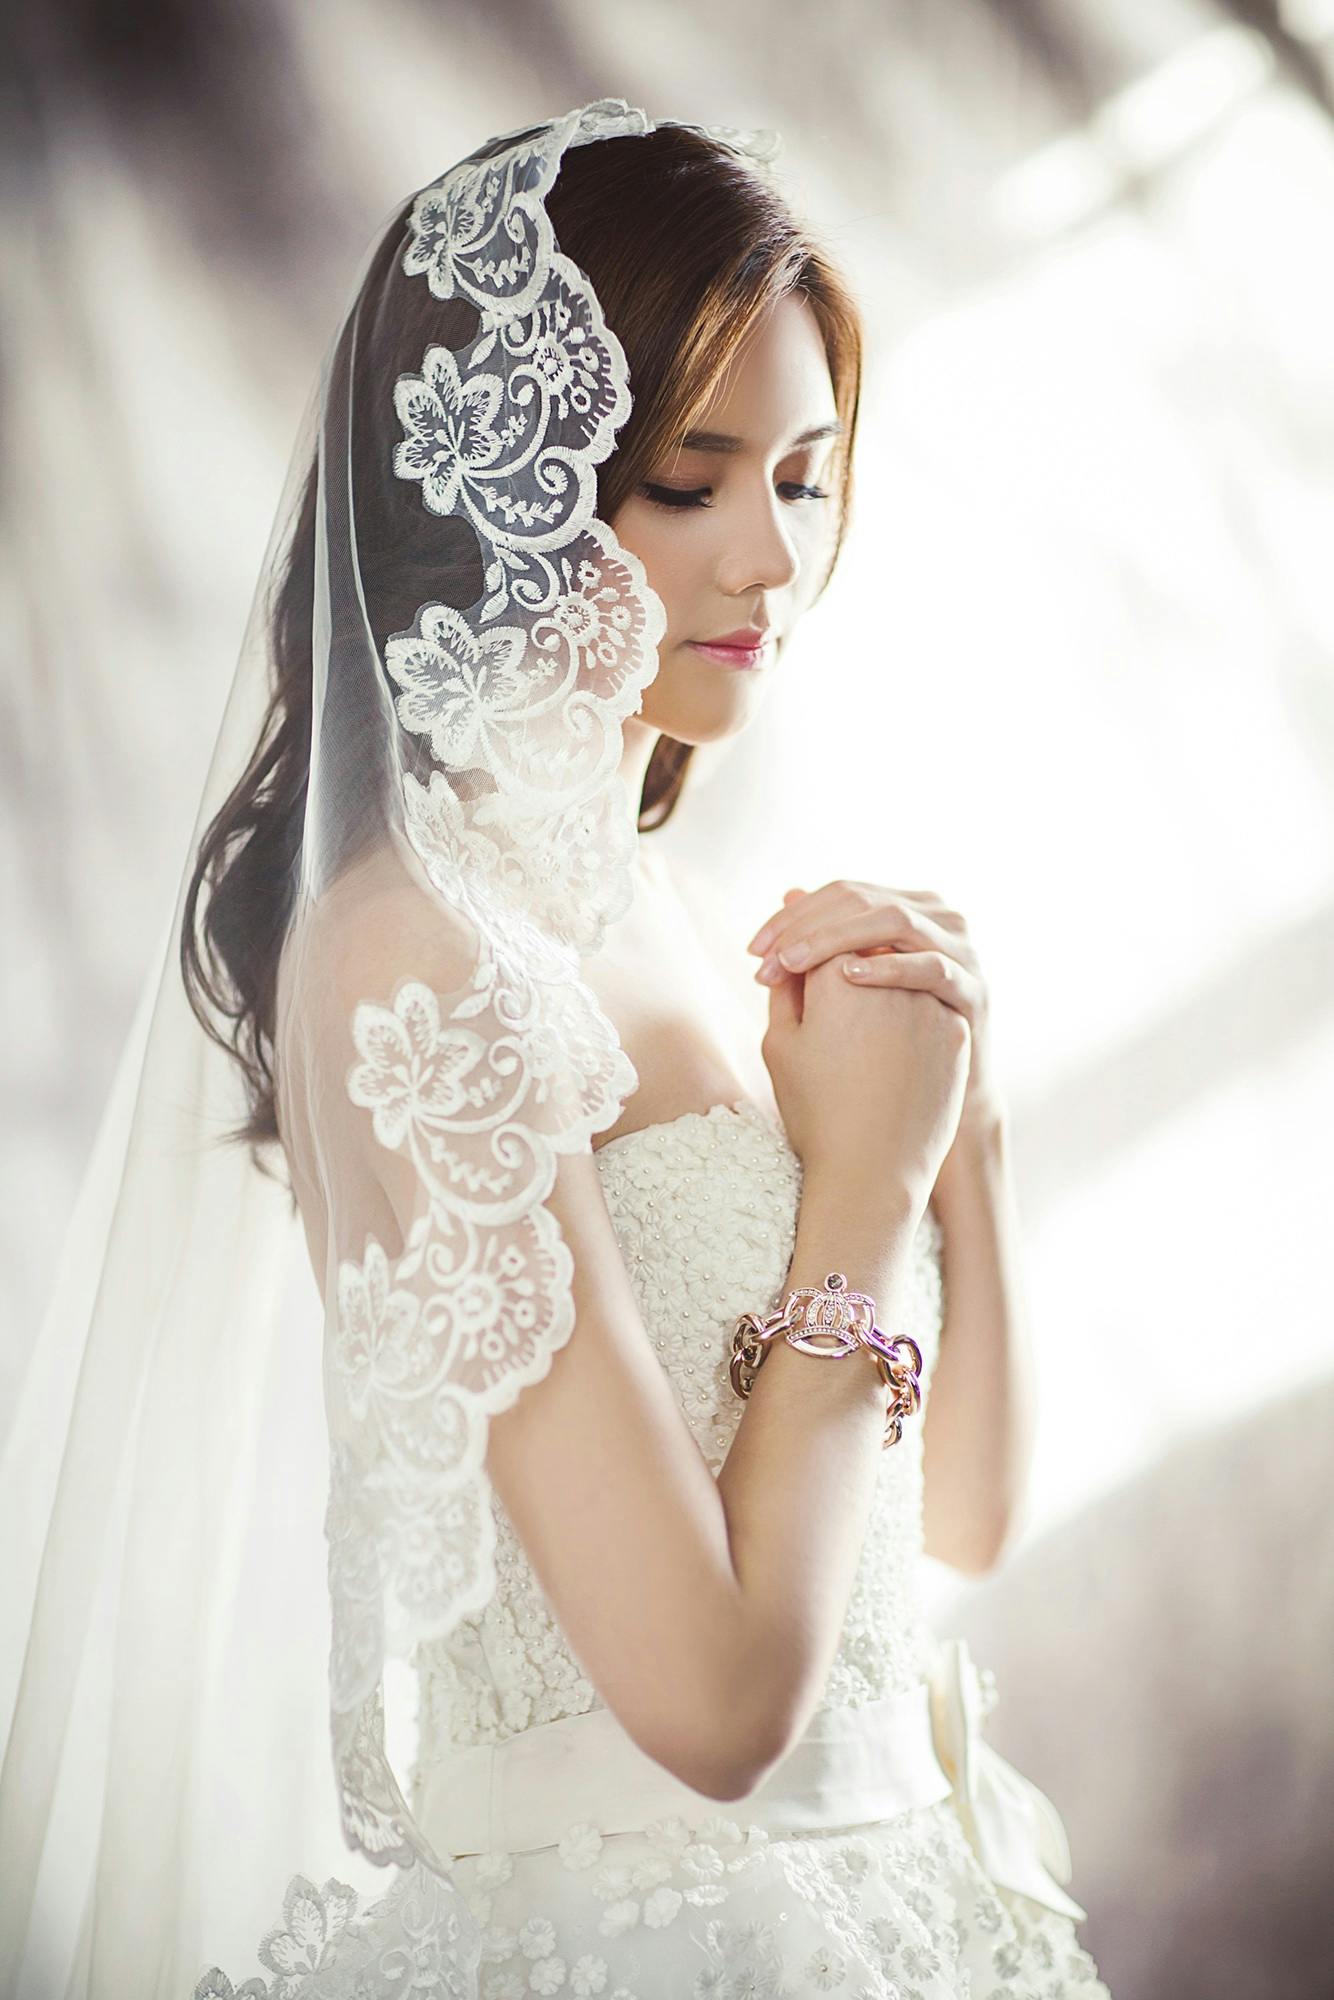 500+ Great Bride Photos · Pexels · Free Stock Photos